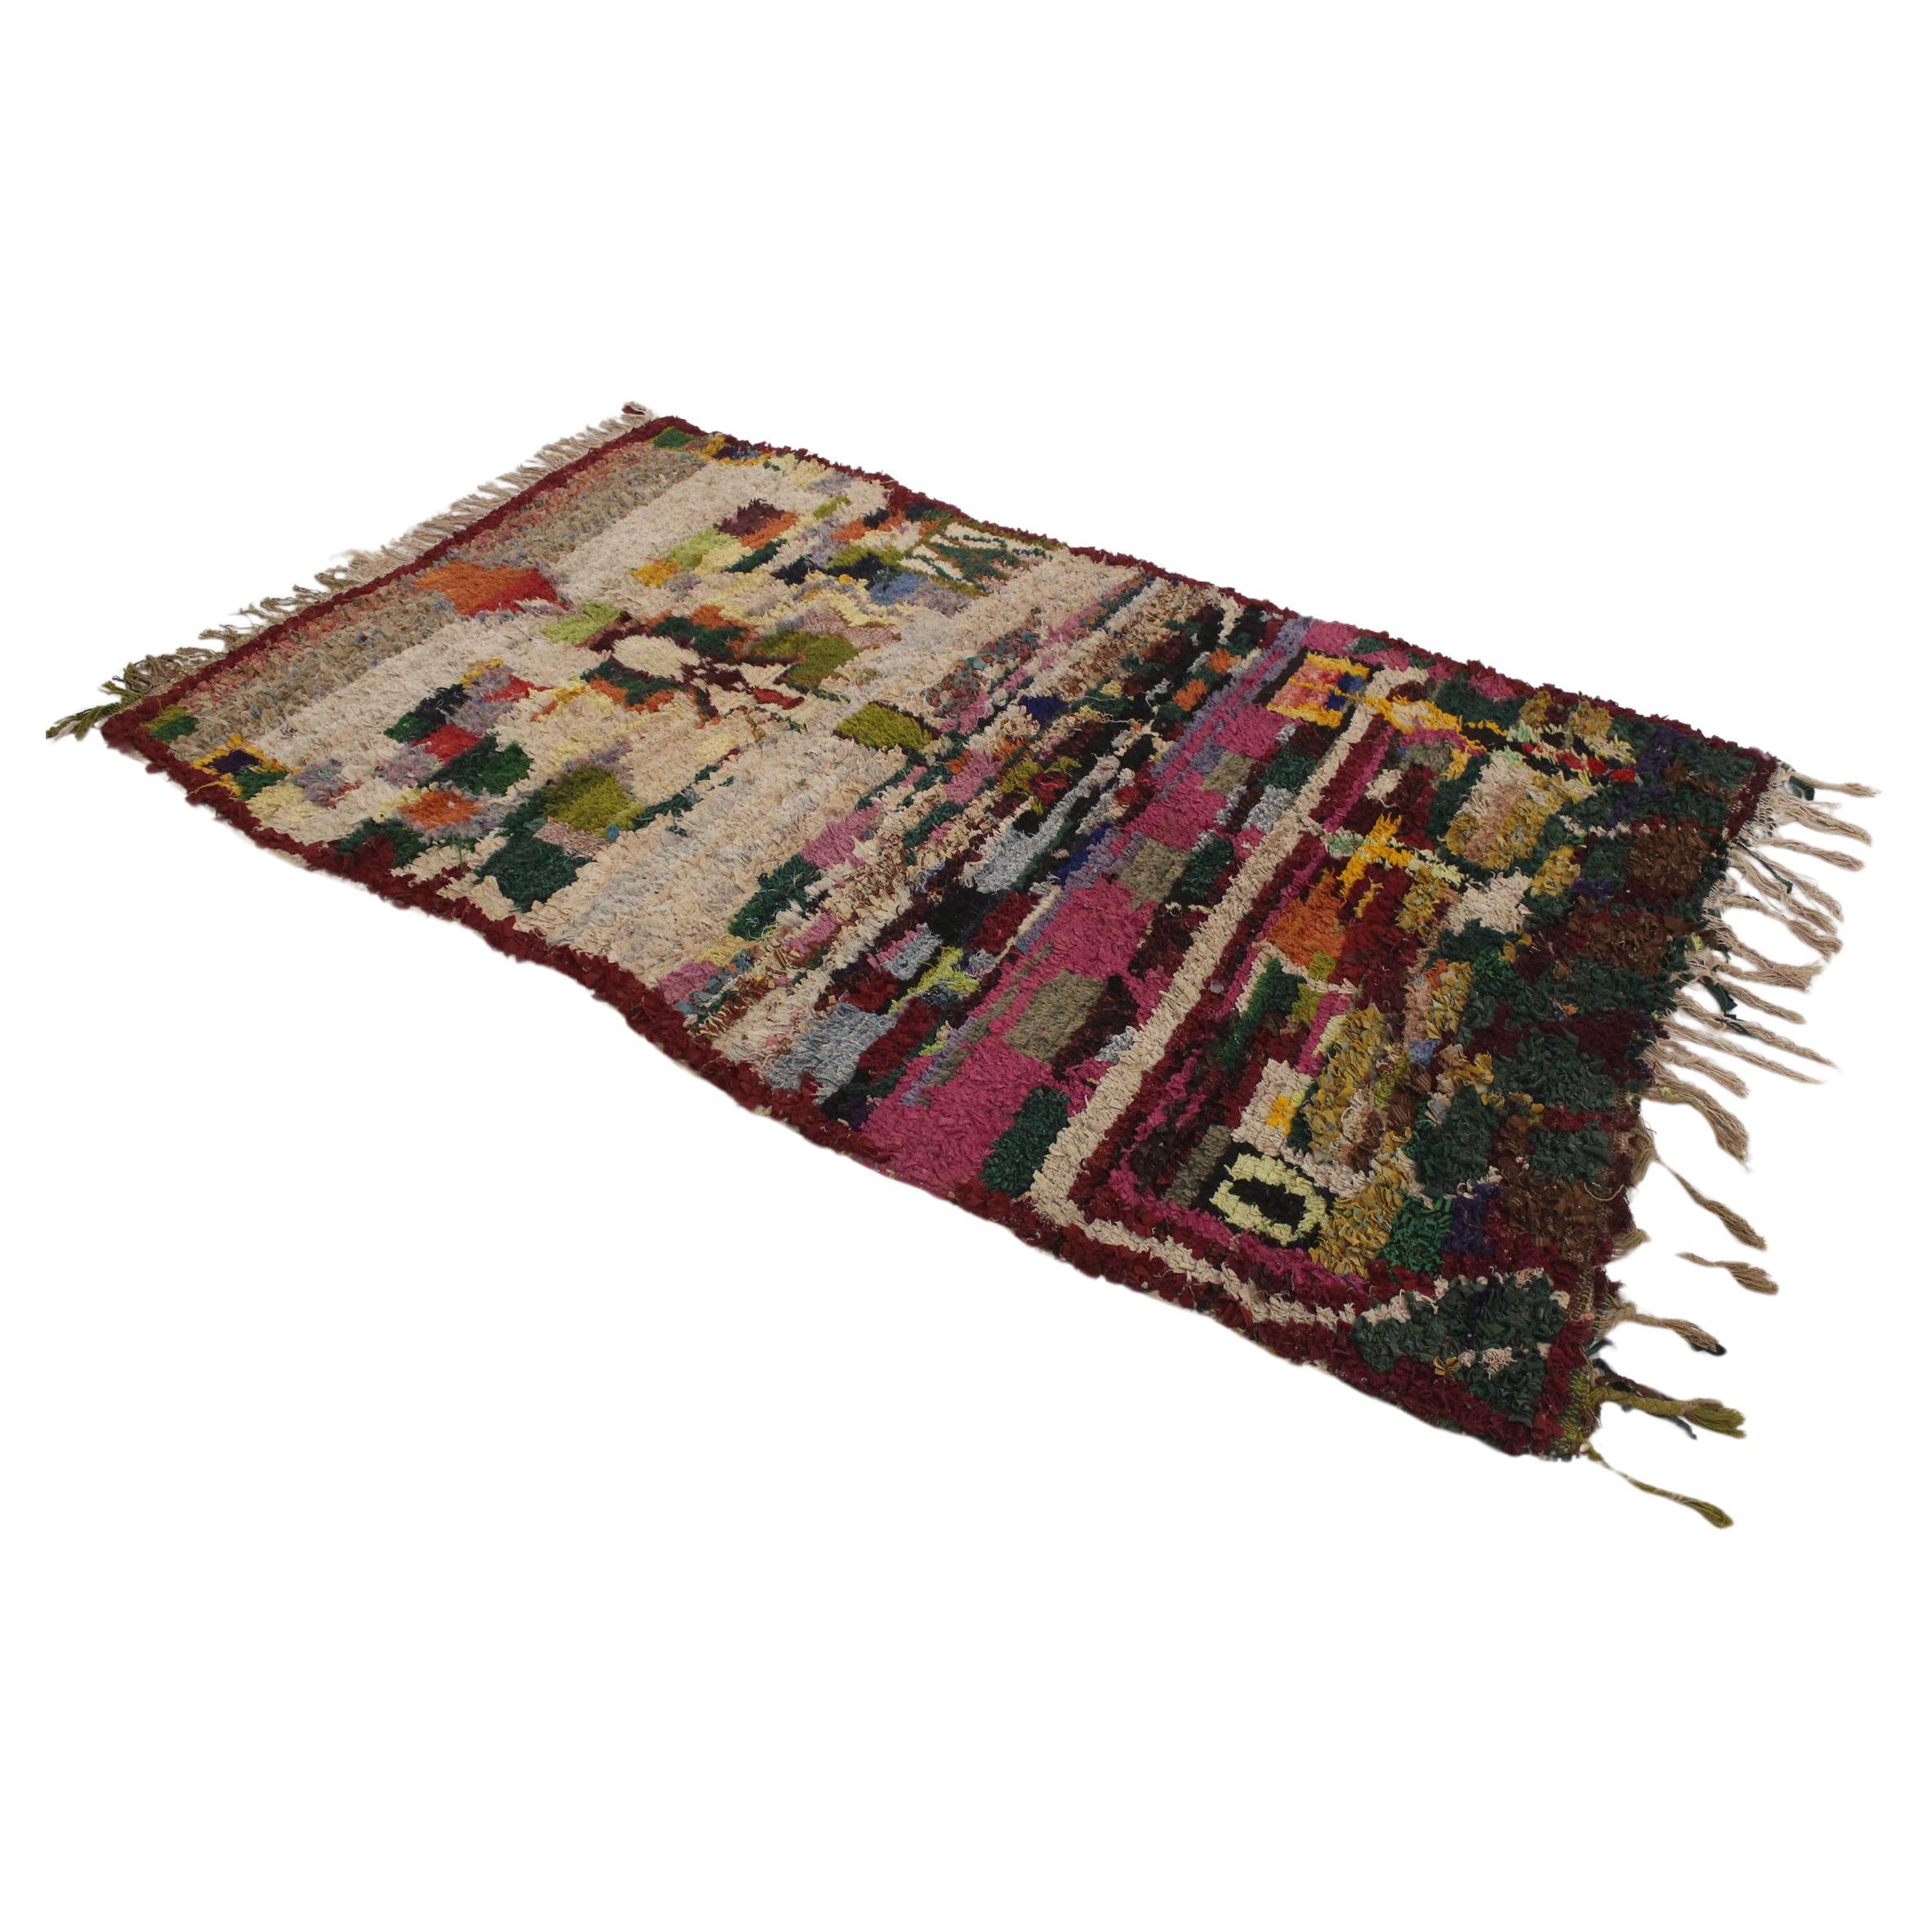 Vintage Moroccan Boucherouite rug - 4x6.7feet / 124x205cm